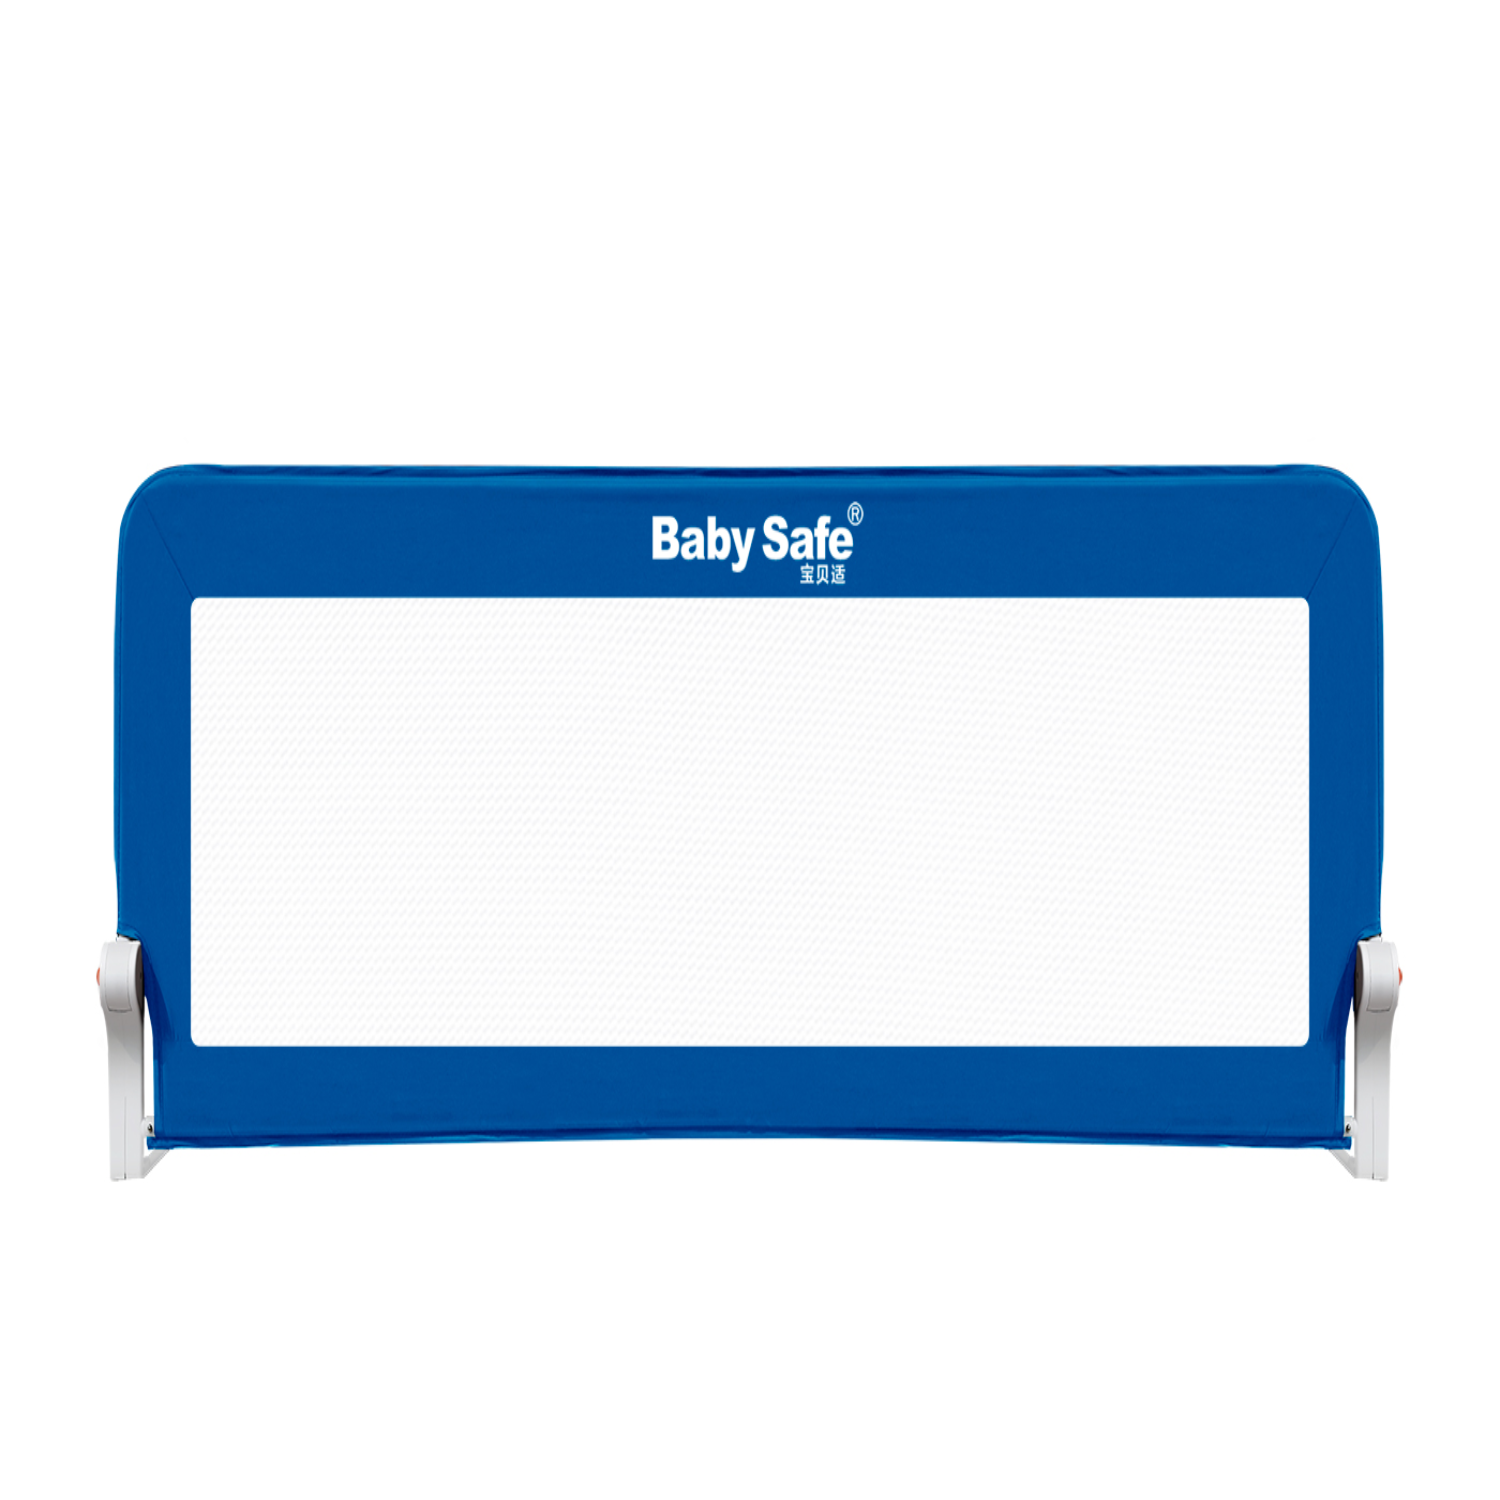 Барьер защитный для кровати Baby Safe 150х42 синий - фото 2